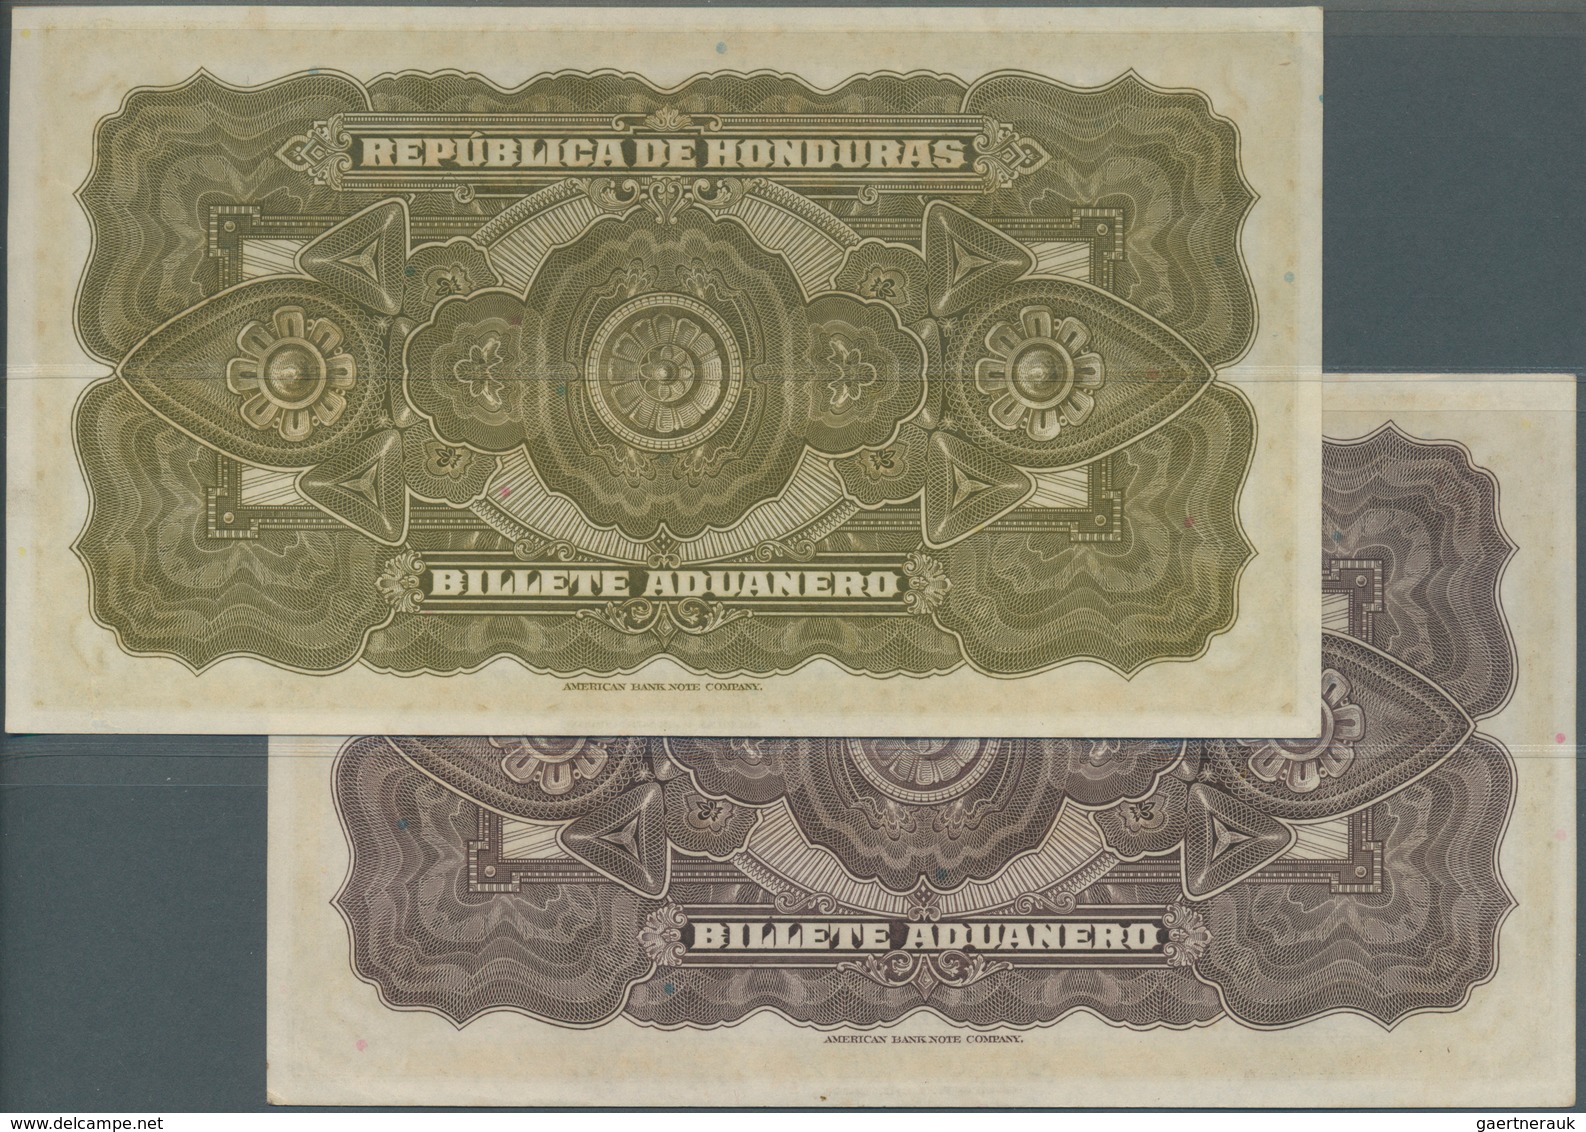 01672 Honduras: Republica De Honduras - Billete Aduanero Pair With 2 And 5 Lempiras L.1937, P.S167, S168 I - Honduras